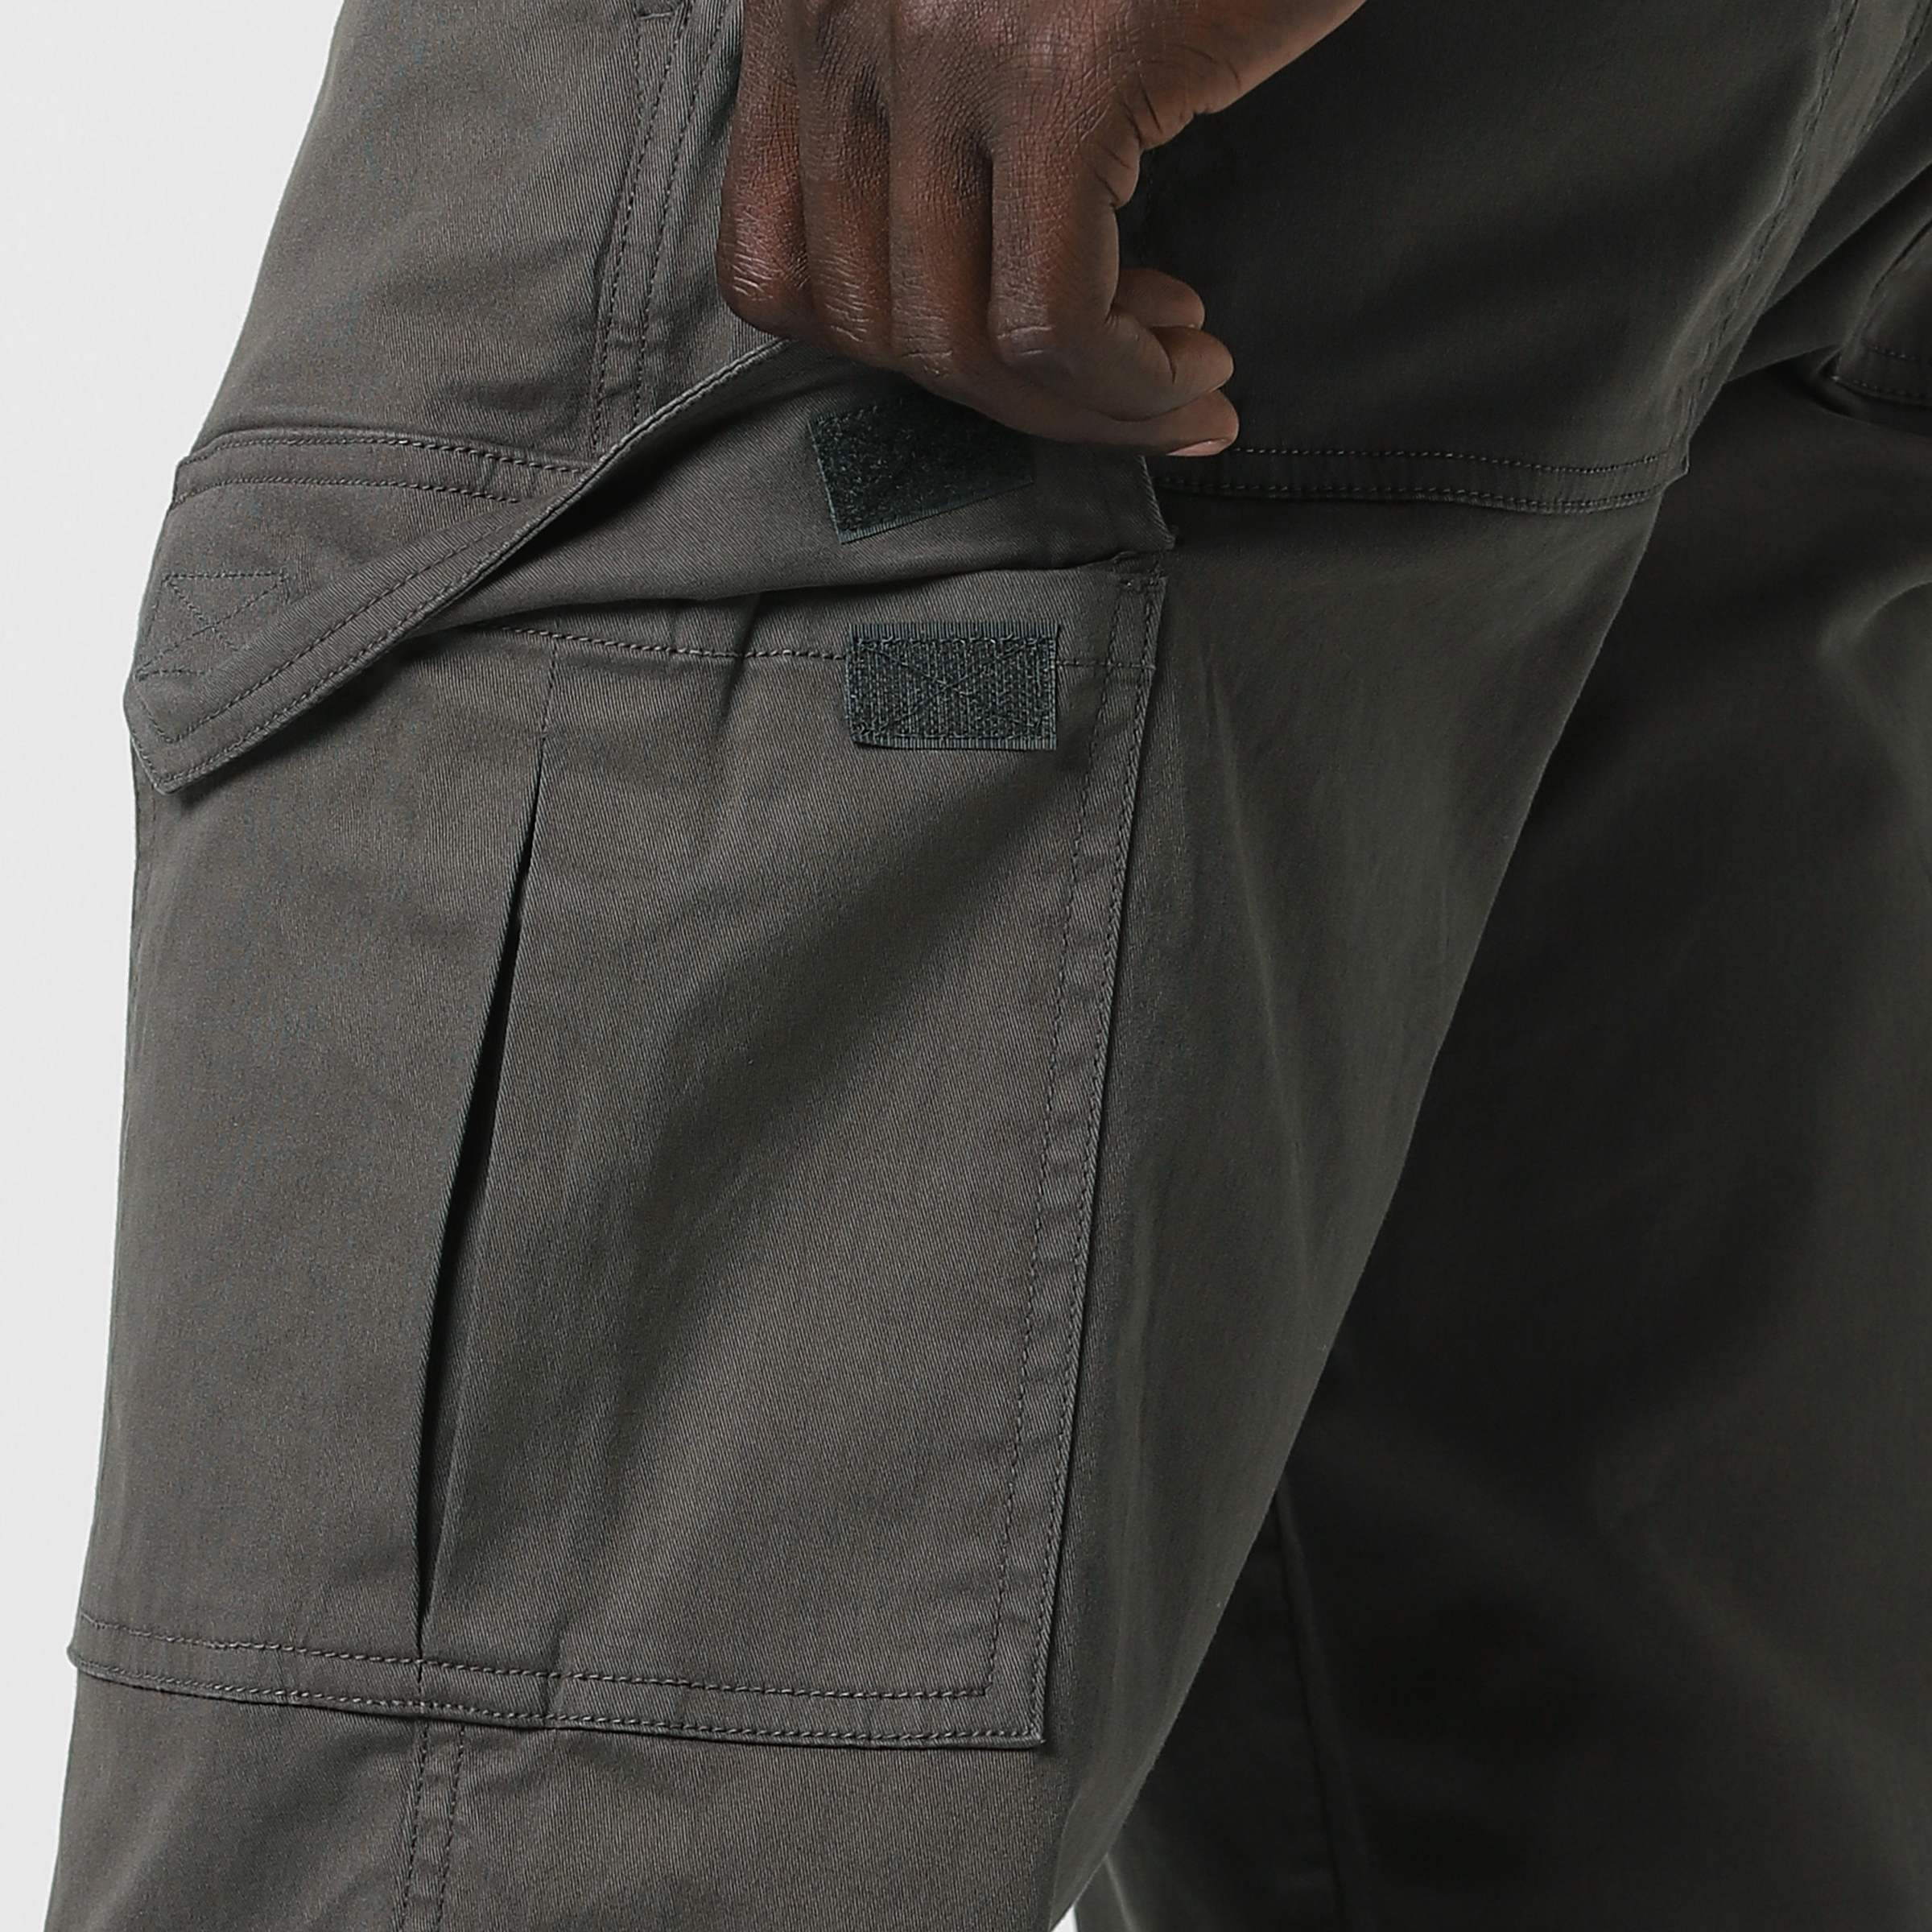 Stretch Cargo Pant Dark Grey close up left velcro pocket open